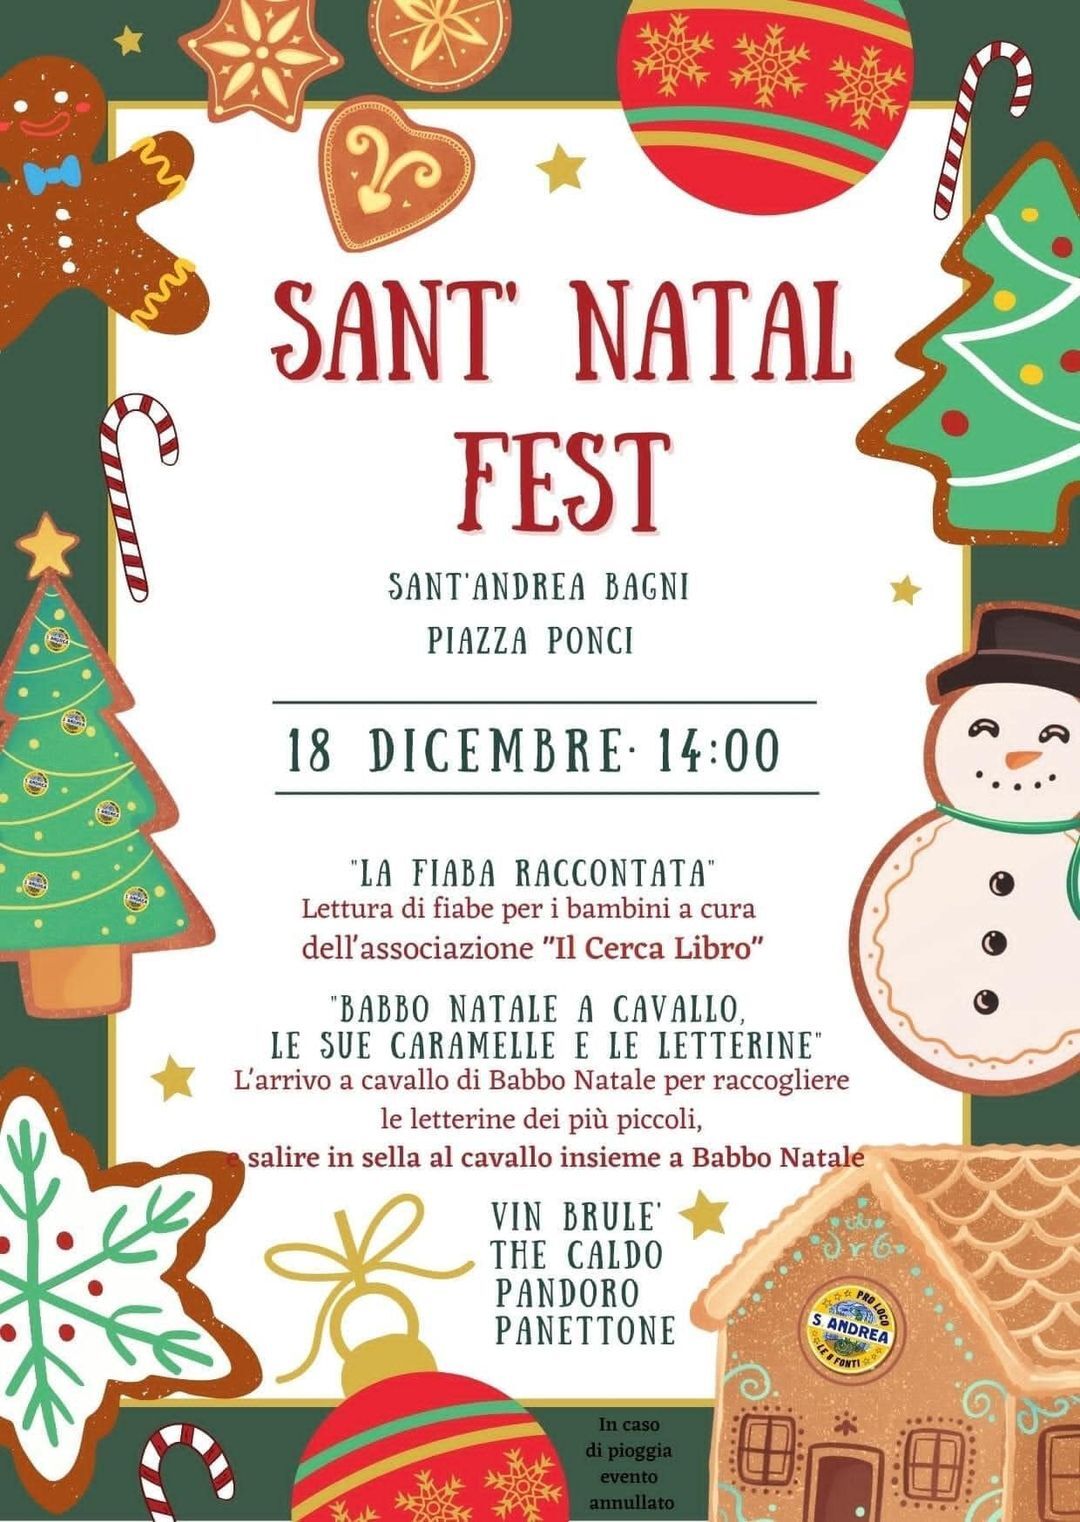 “SANT’ NATAL FEST” a S.Andrea Bagni